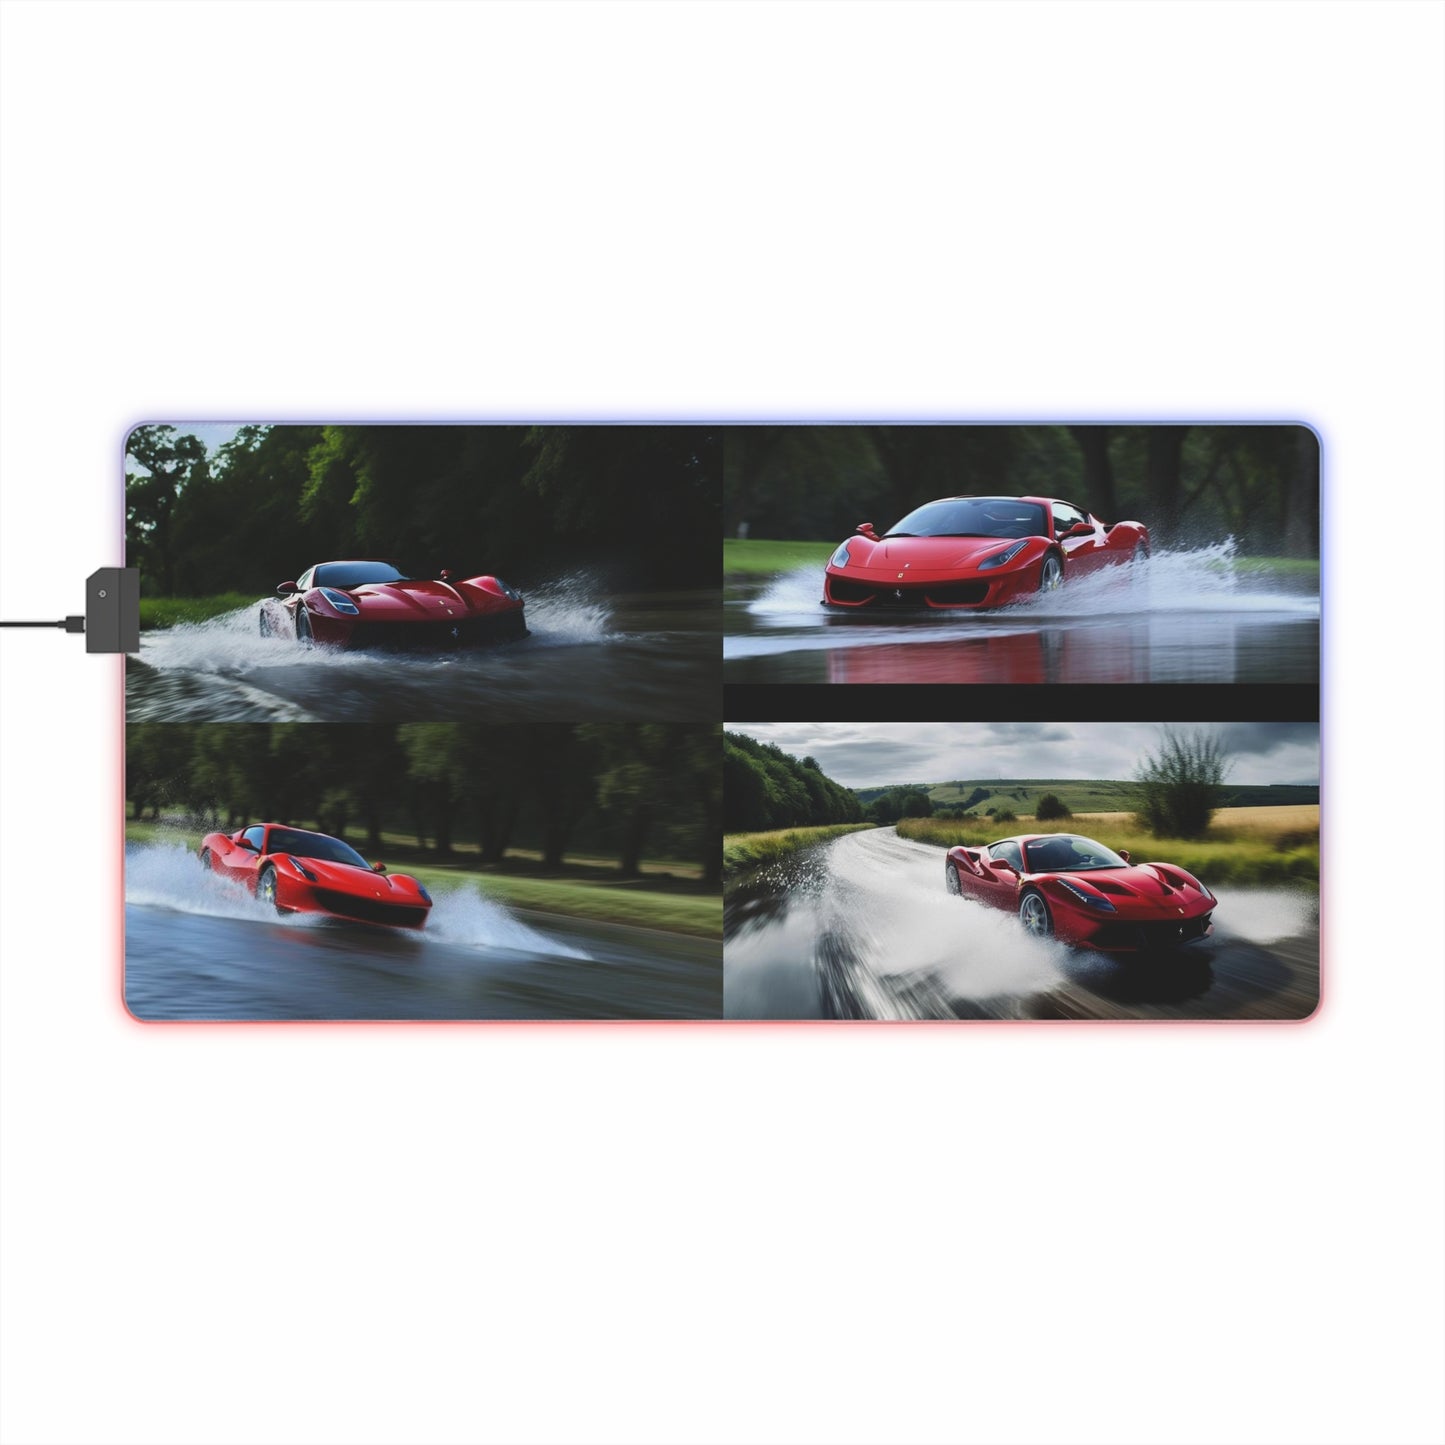 LED Gaming Mouse Pad Water Ferrari Splash 5